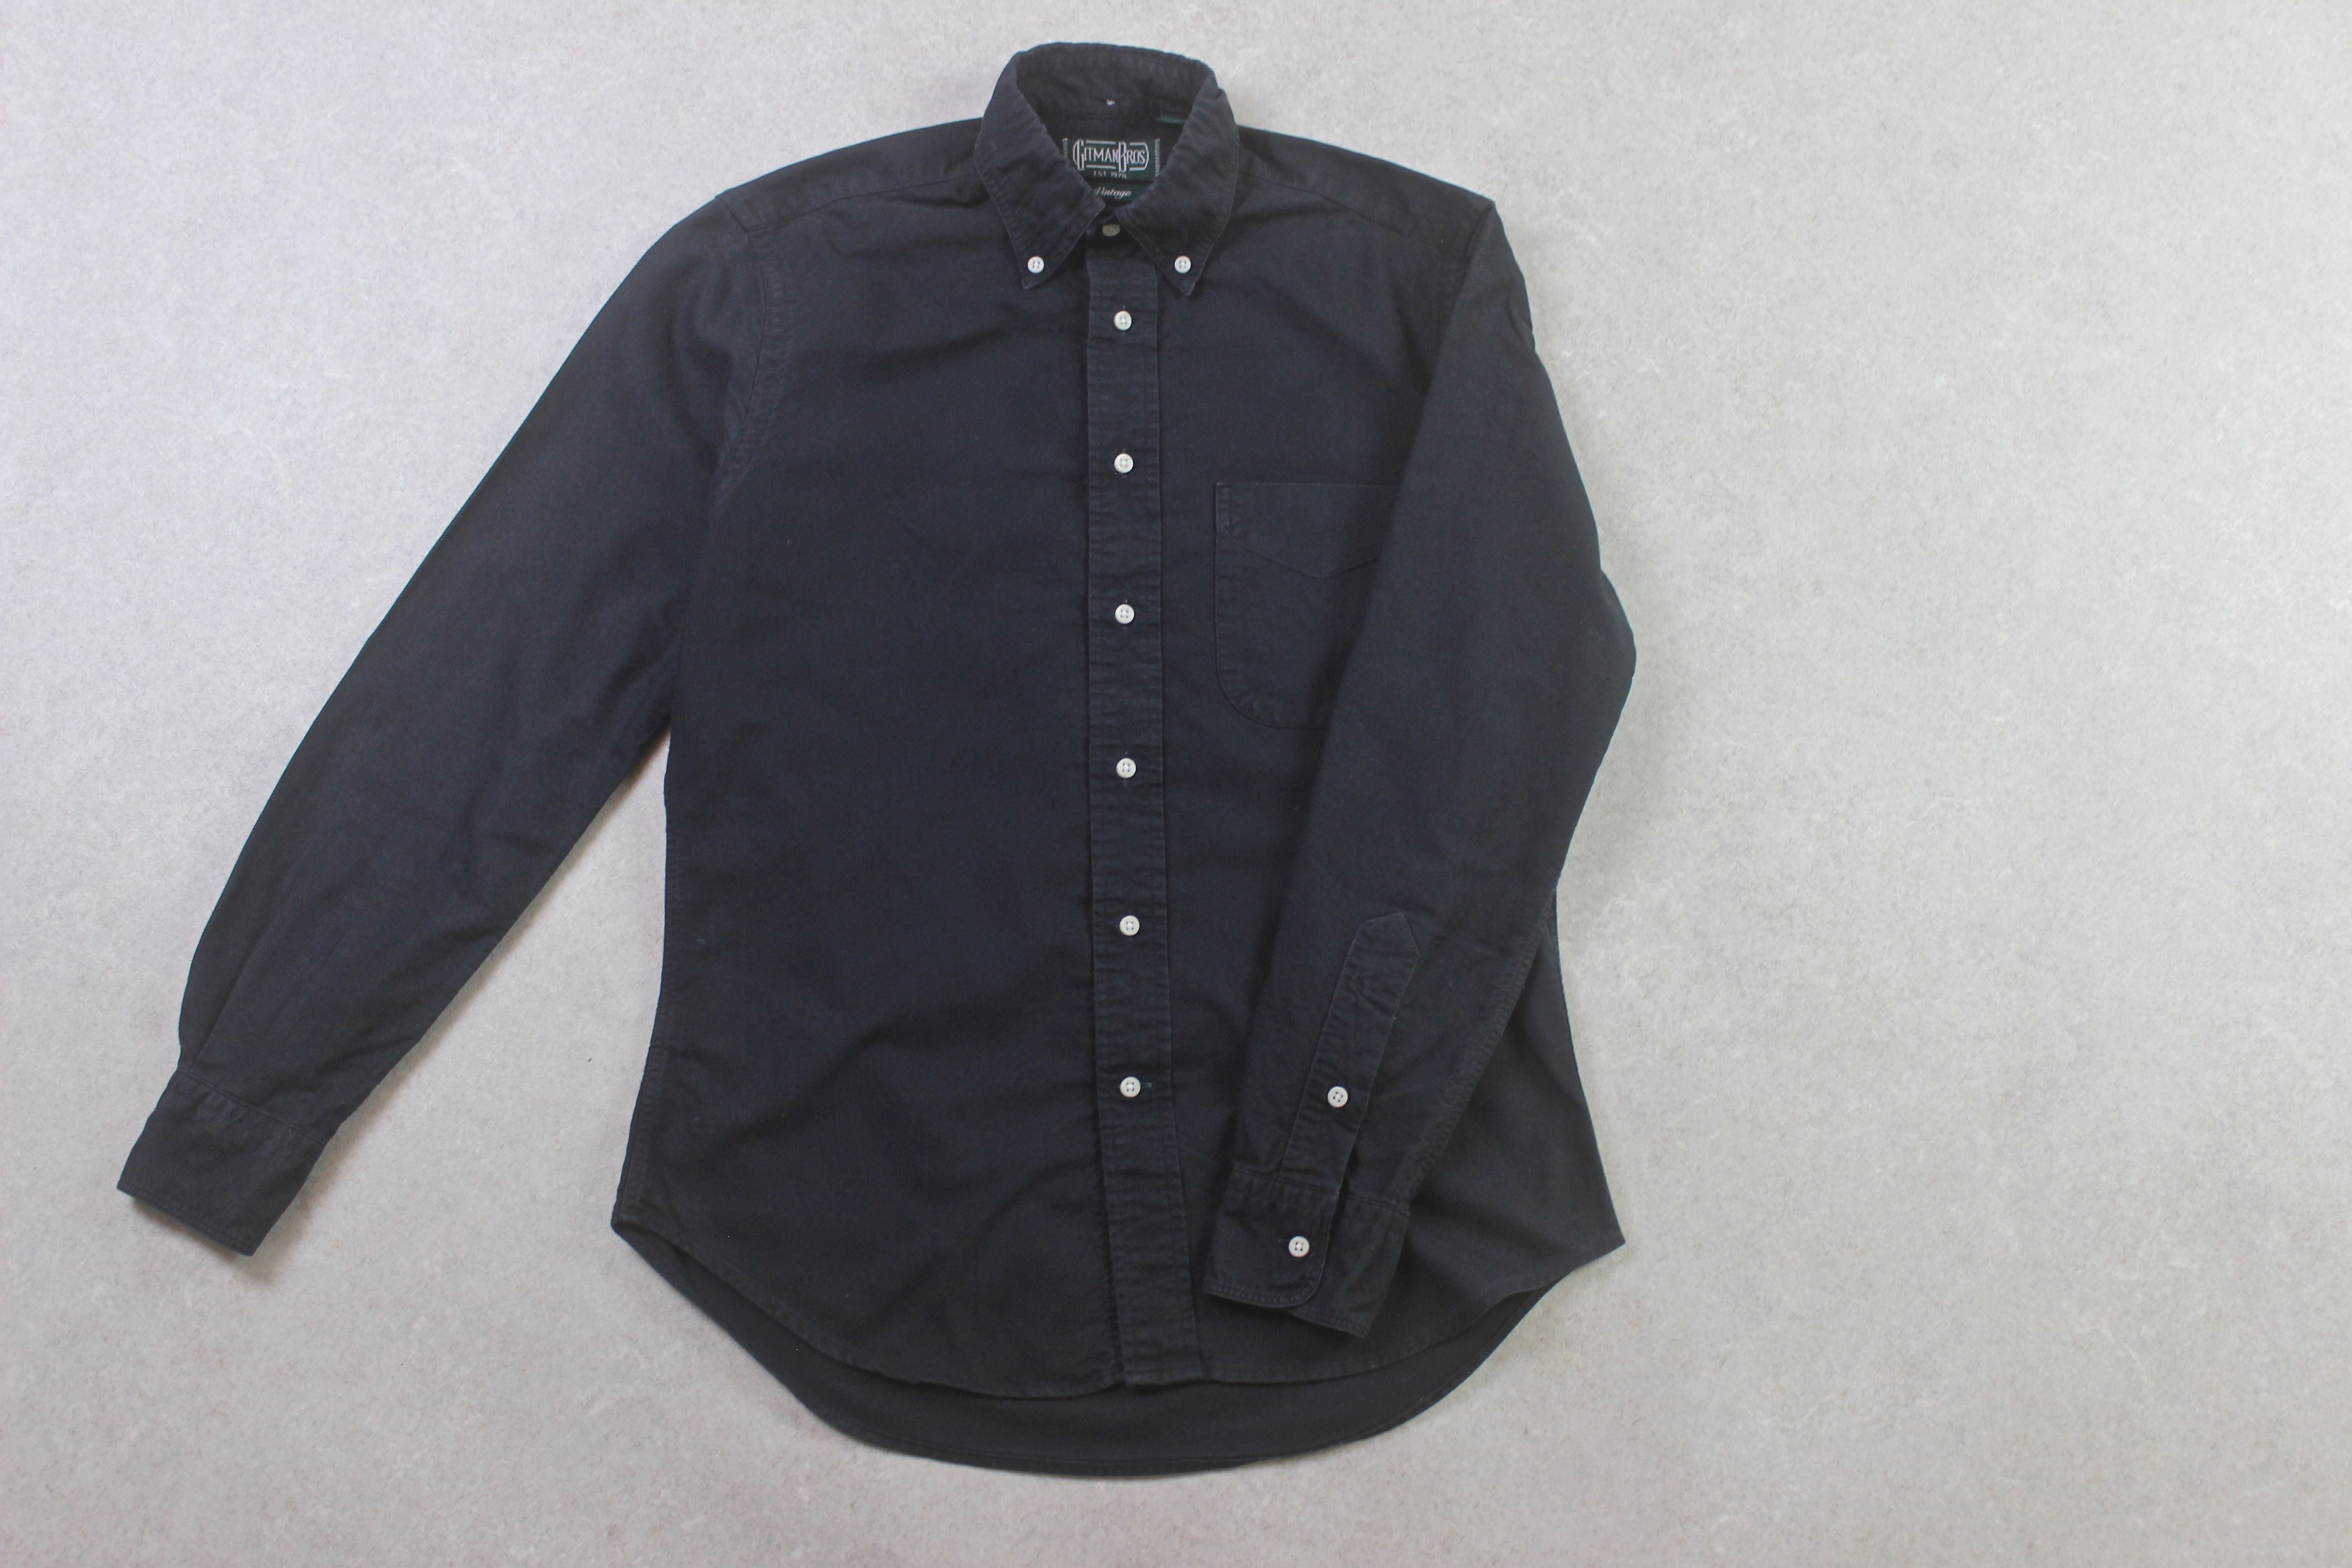 Gitman Bros Vintage - Shirt - Black - Small